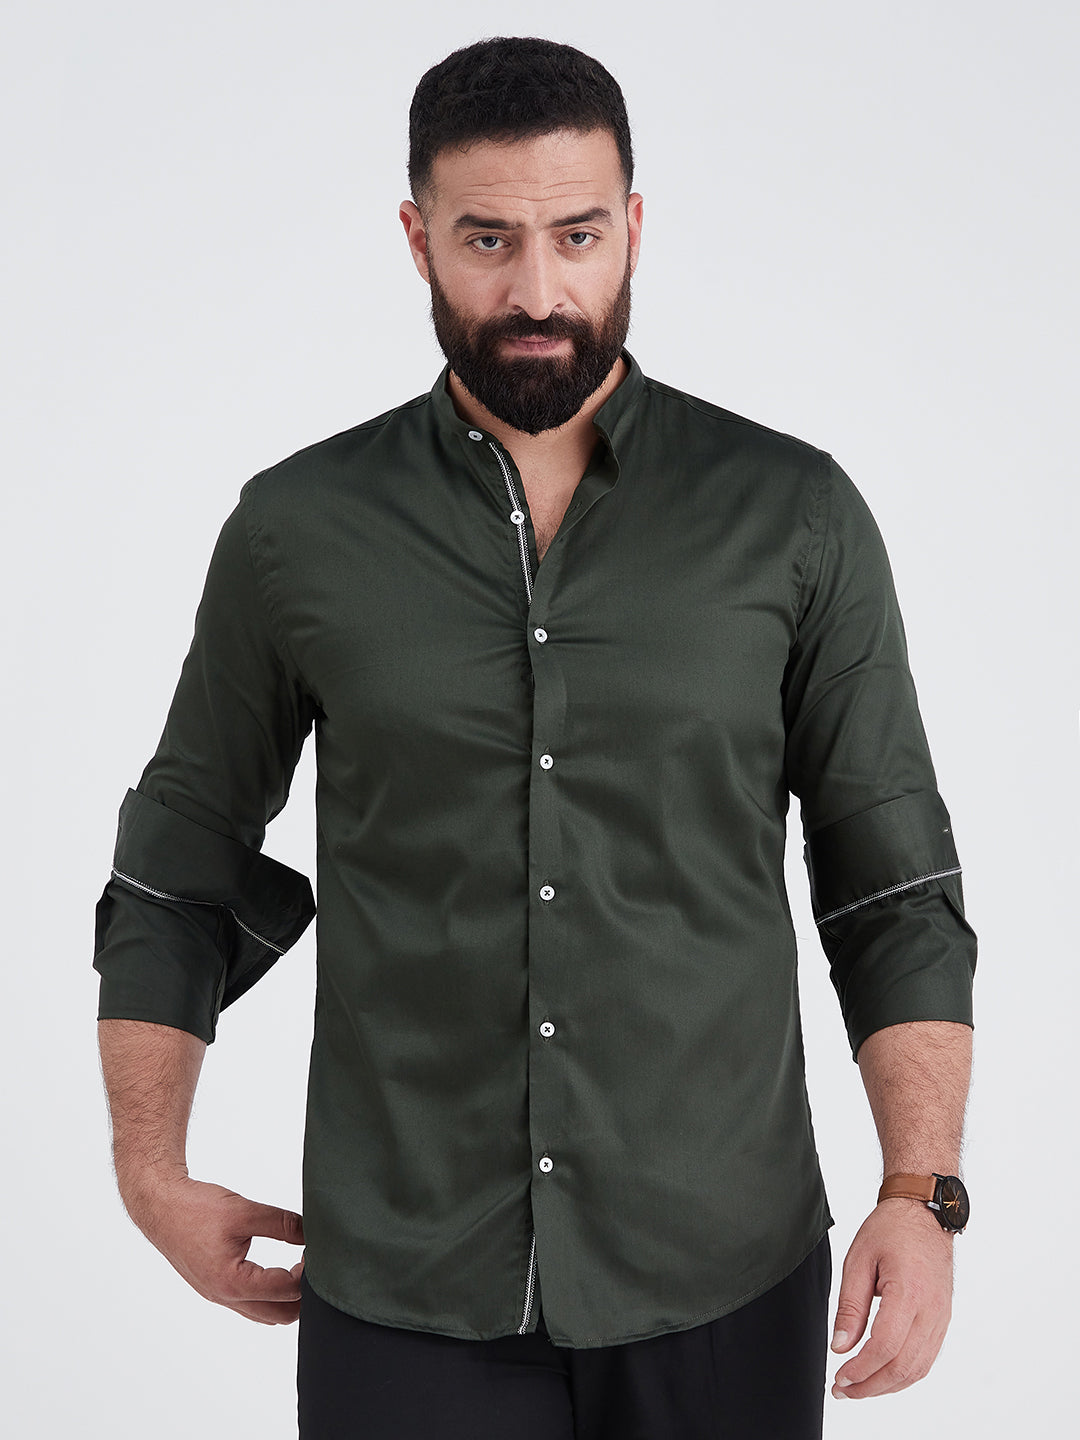 Hunter Green Shirt